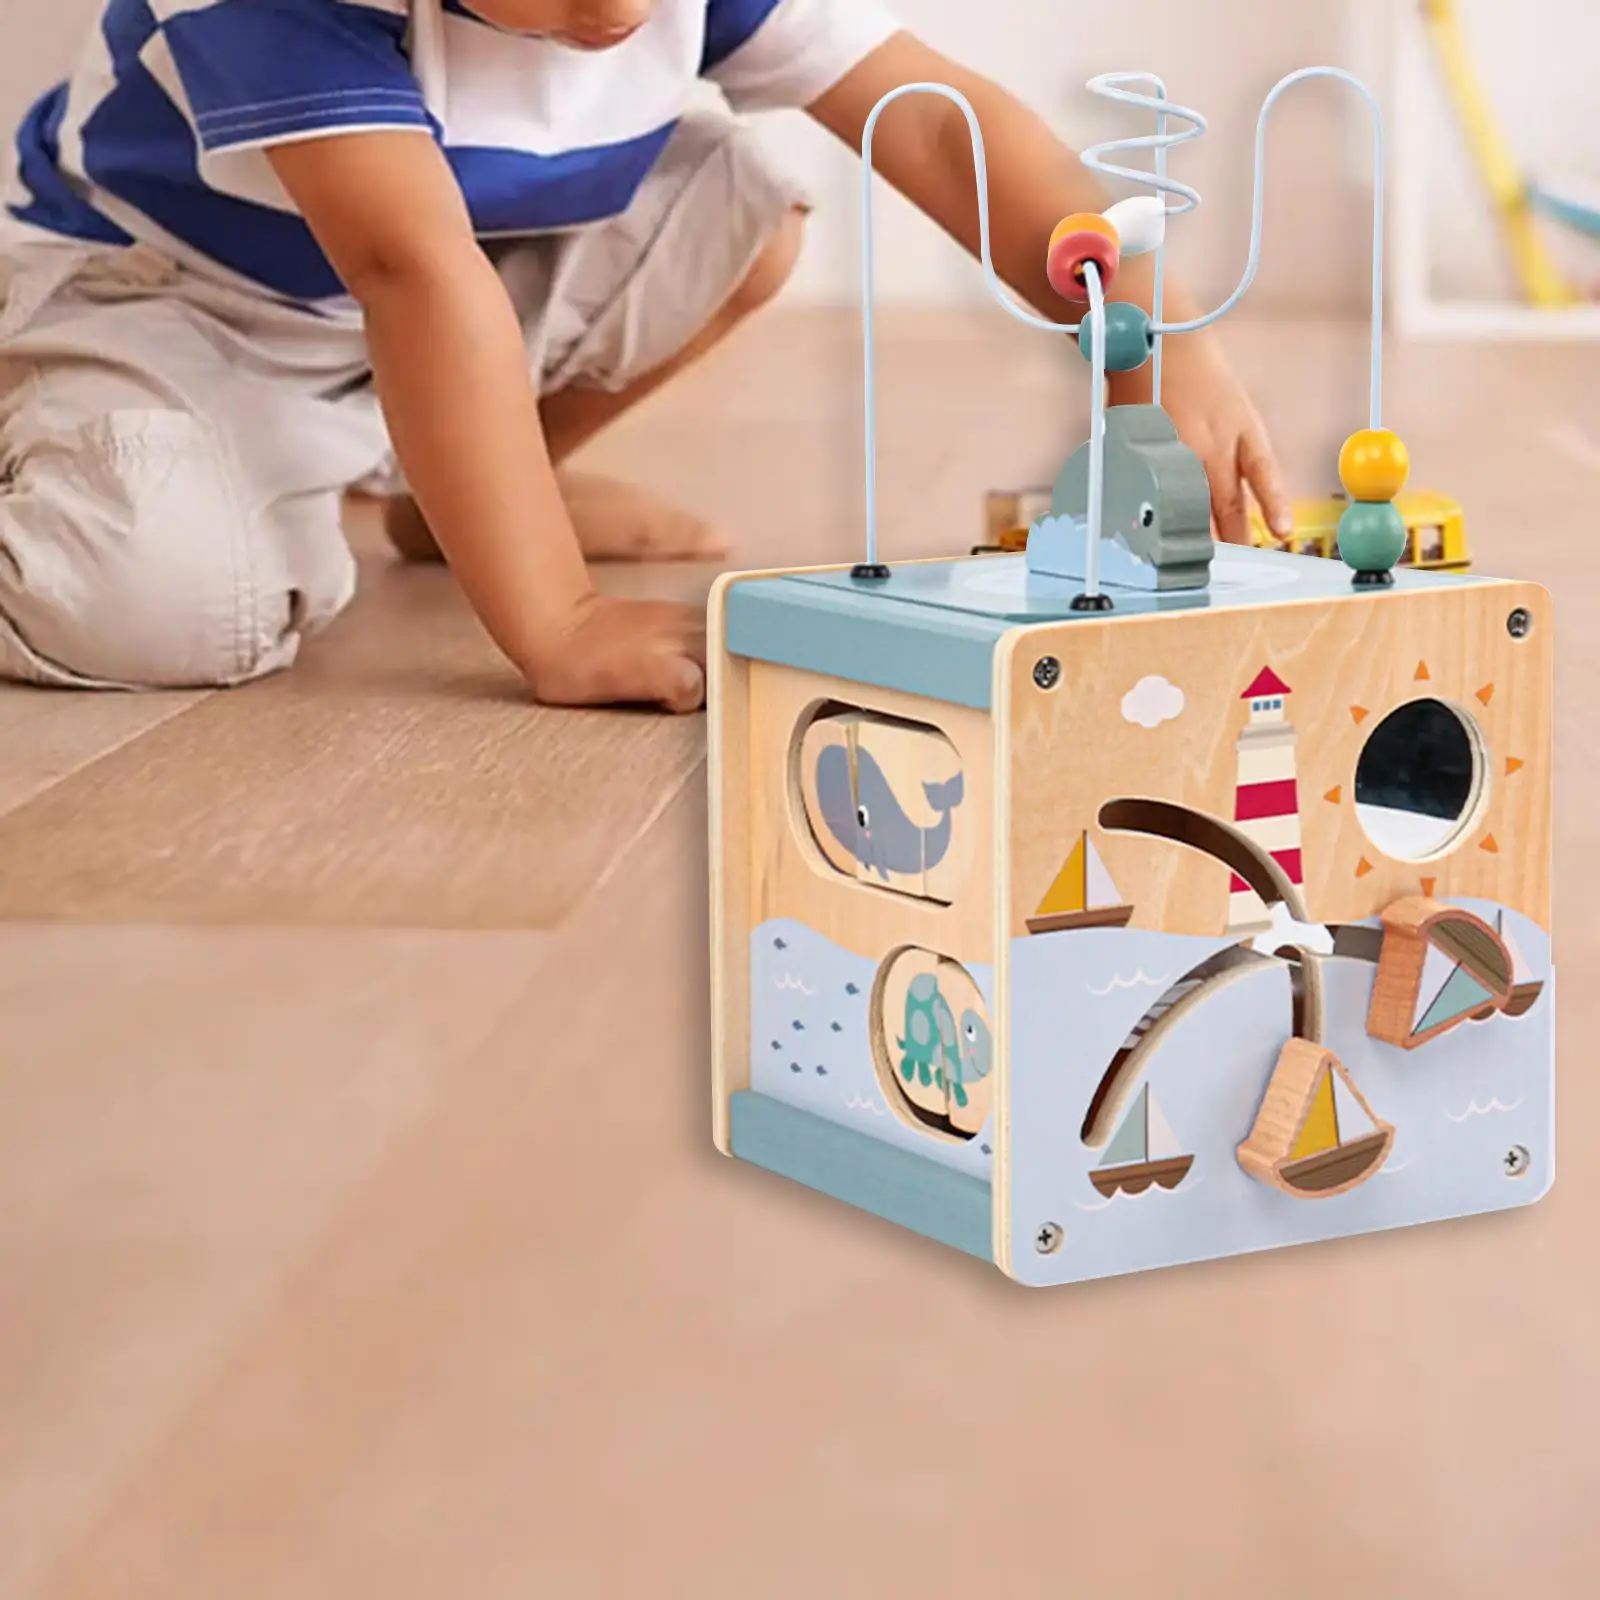 Bead Maze Toy Colour Sort Activity Boards Developmental Toys Bead Maze for Birthday